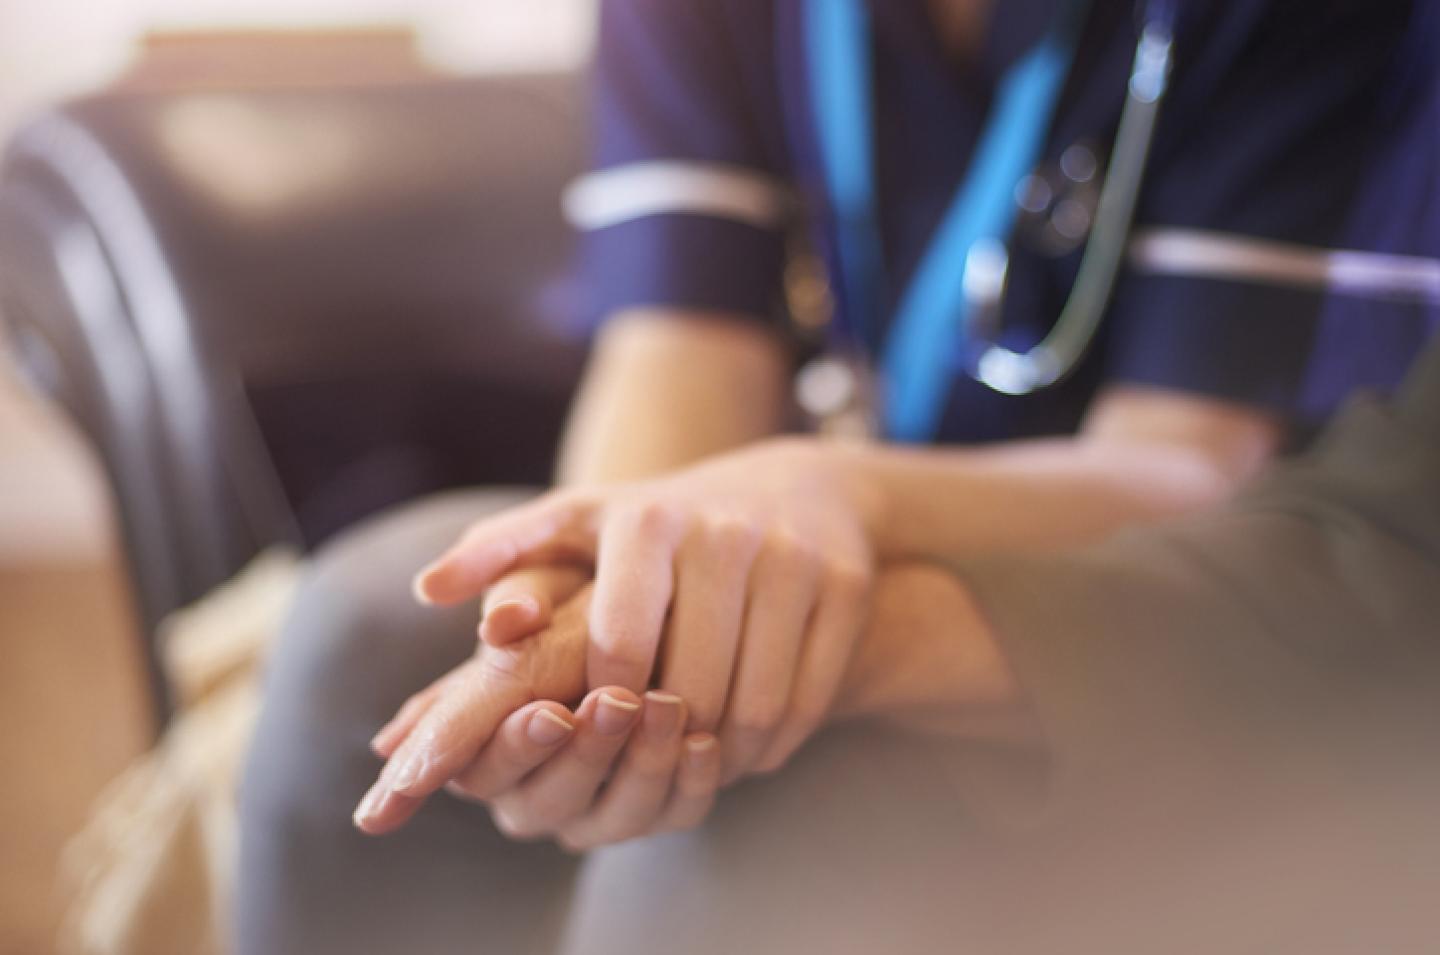 nurse holding patients hand